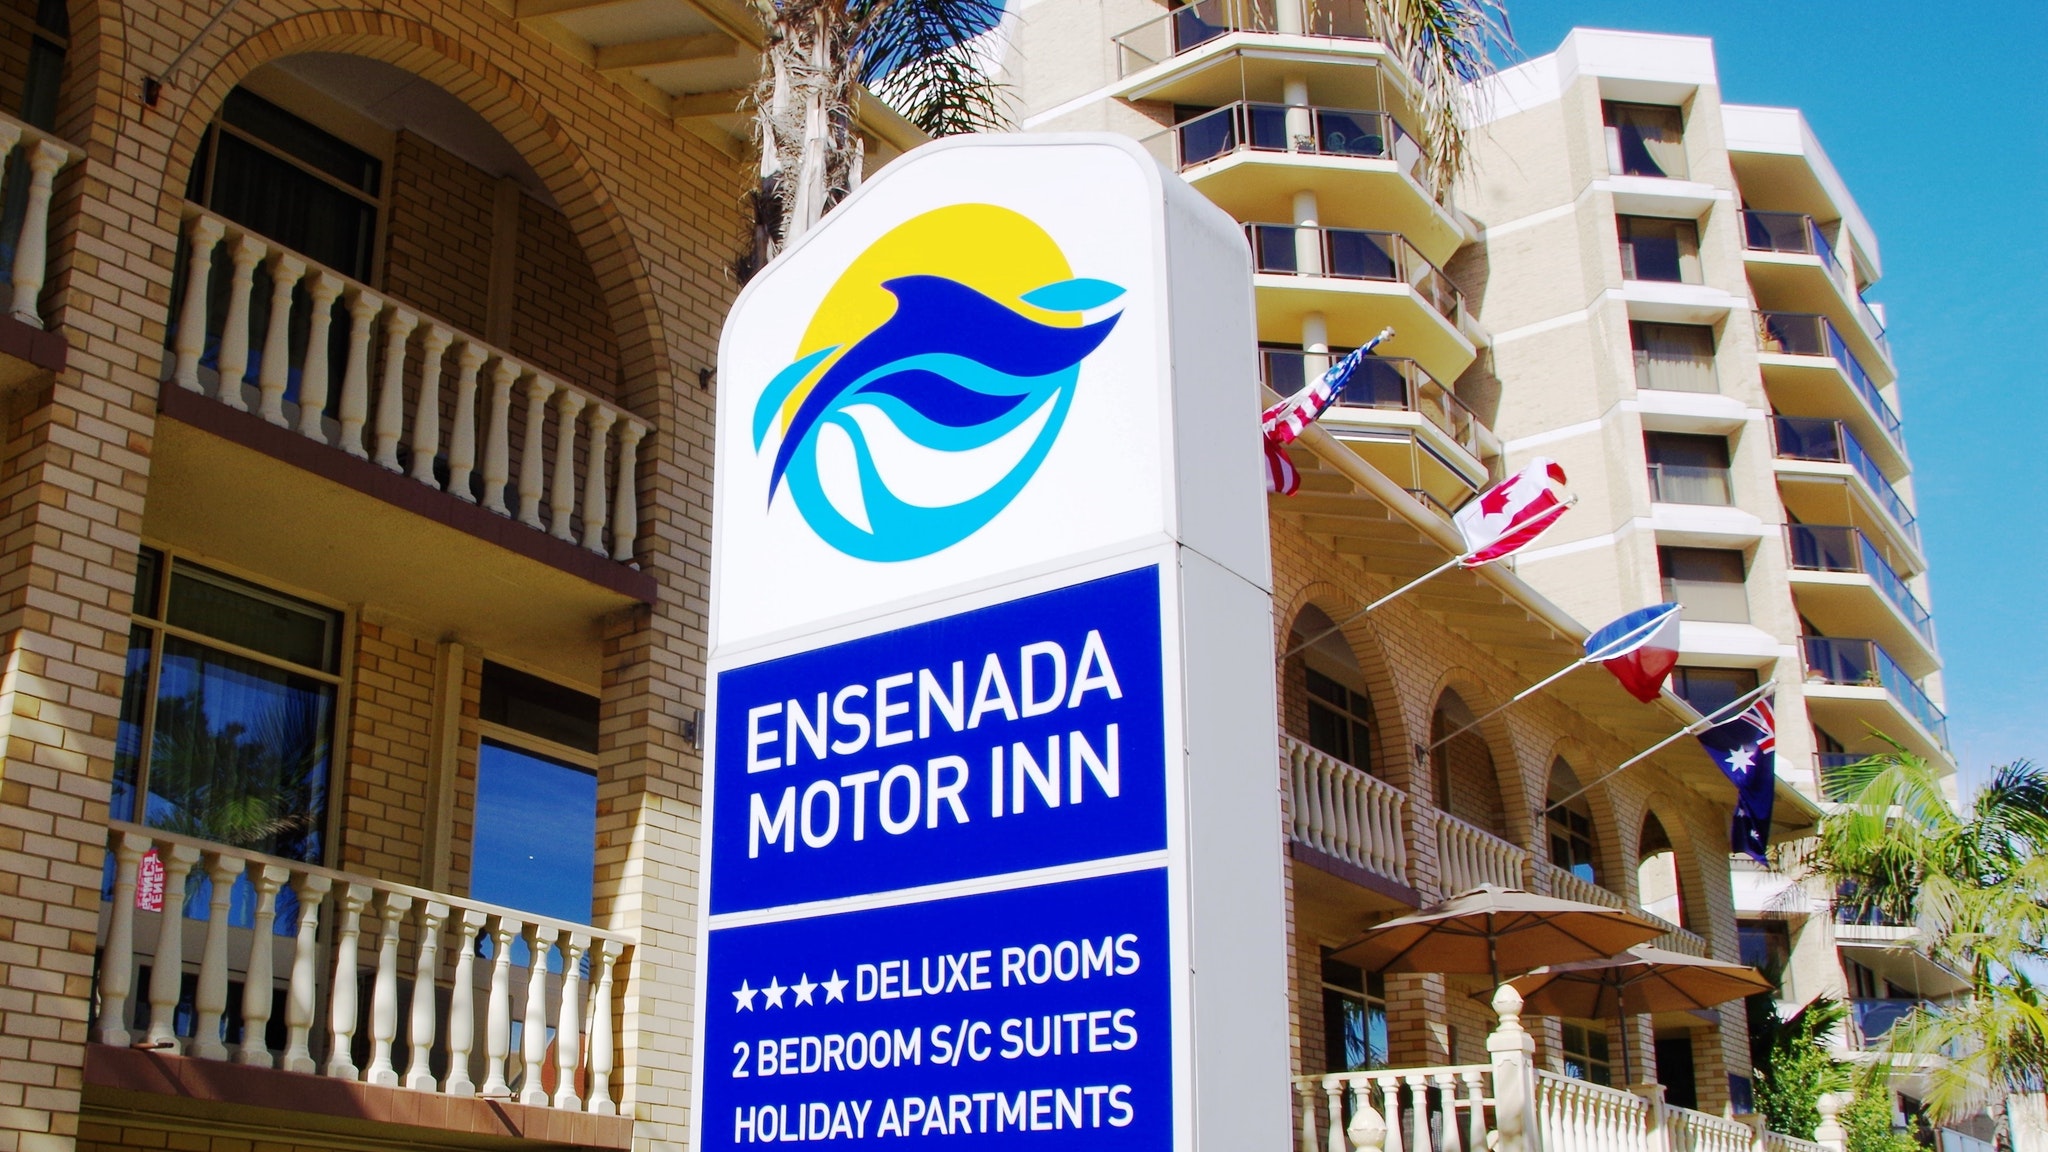 Ensenada Motor Inn And Suites - Nambucca Heads Accommodation 11